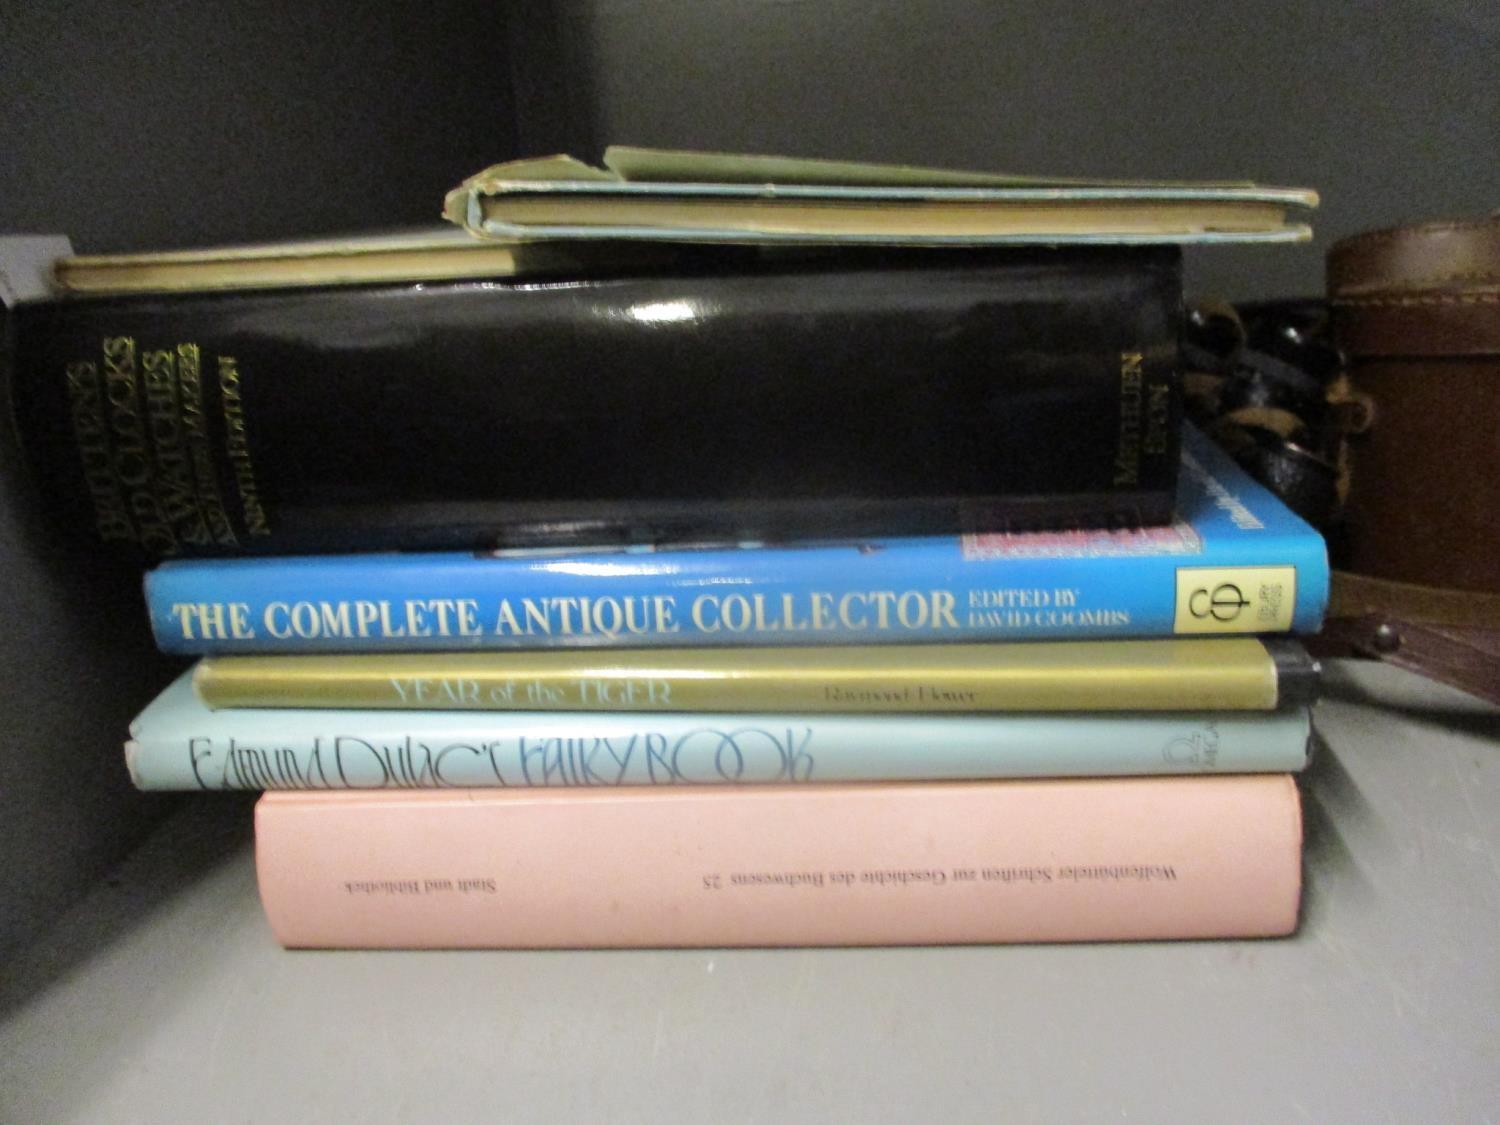 Books to include Audubon's American Birds Batsford colour books, Balletomane's Sketchbook, Britten's